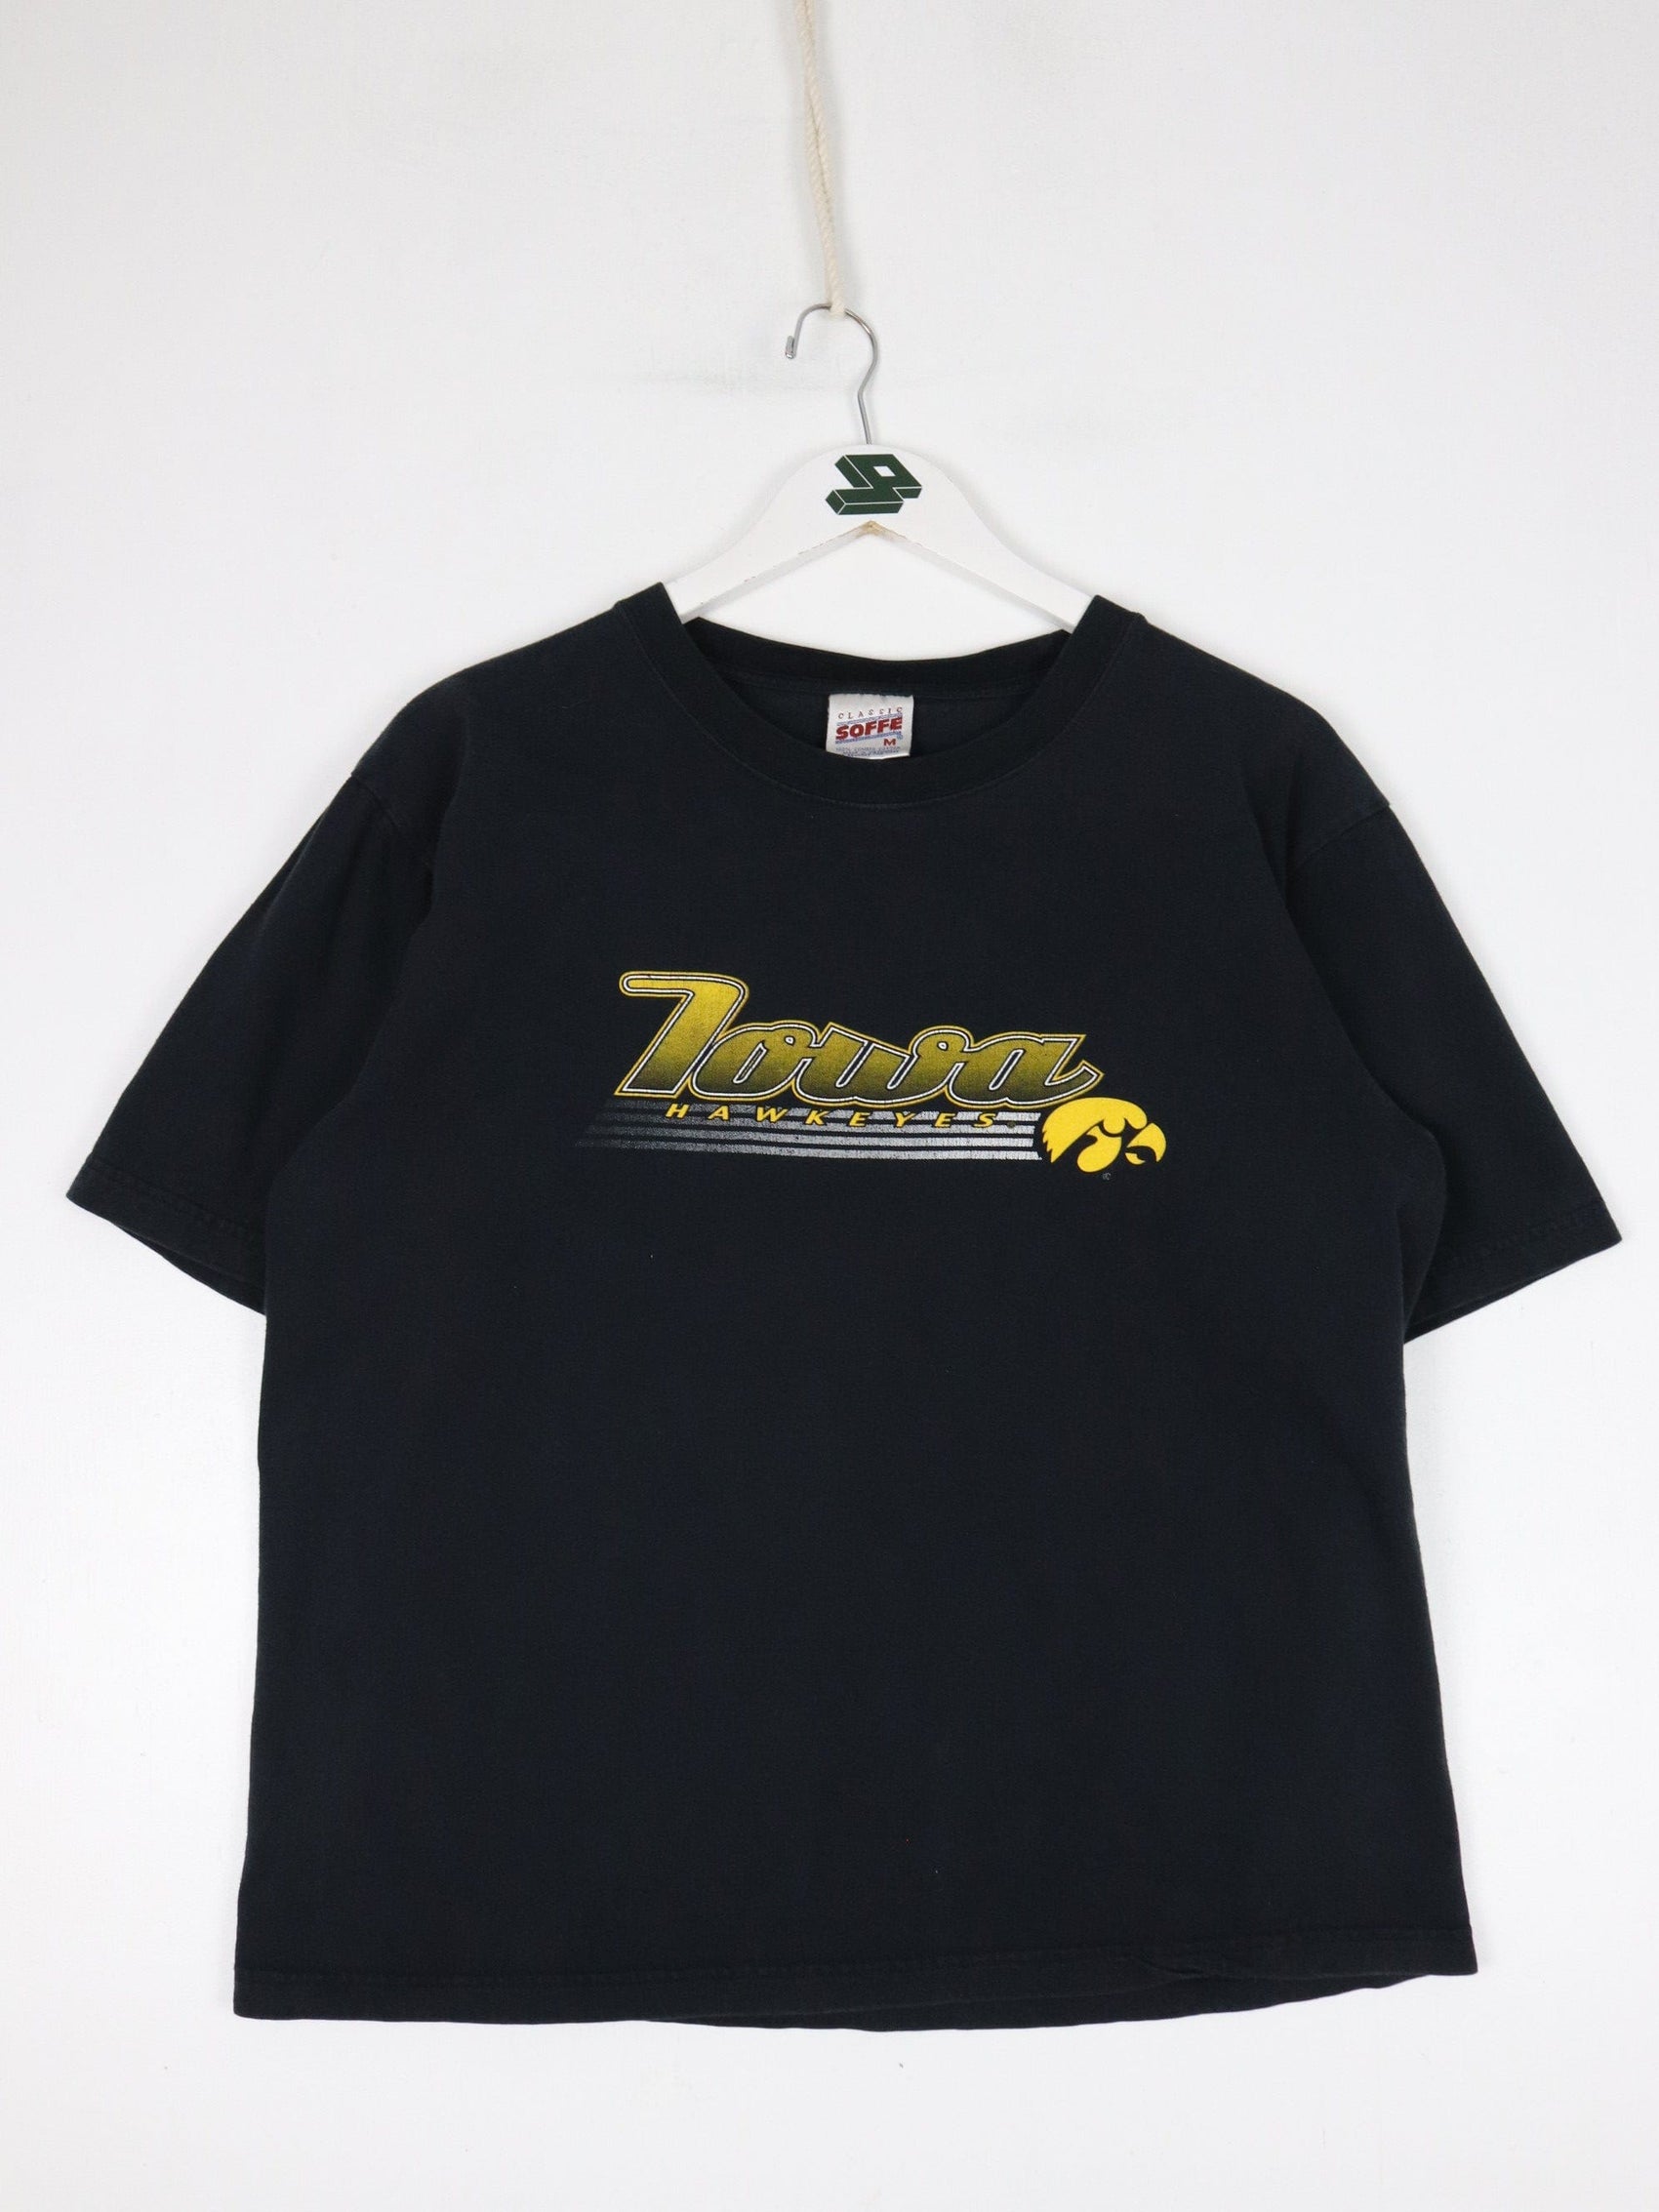 Collegiate T-Shirts & Tank Tops Vintage Iowa Hawkeyes T Shirt Adult Medium Cropped Black 90s College